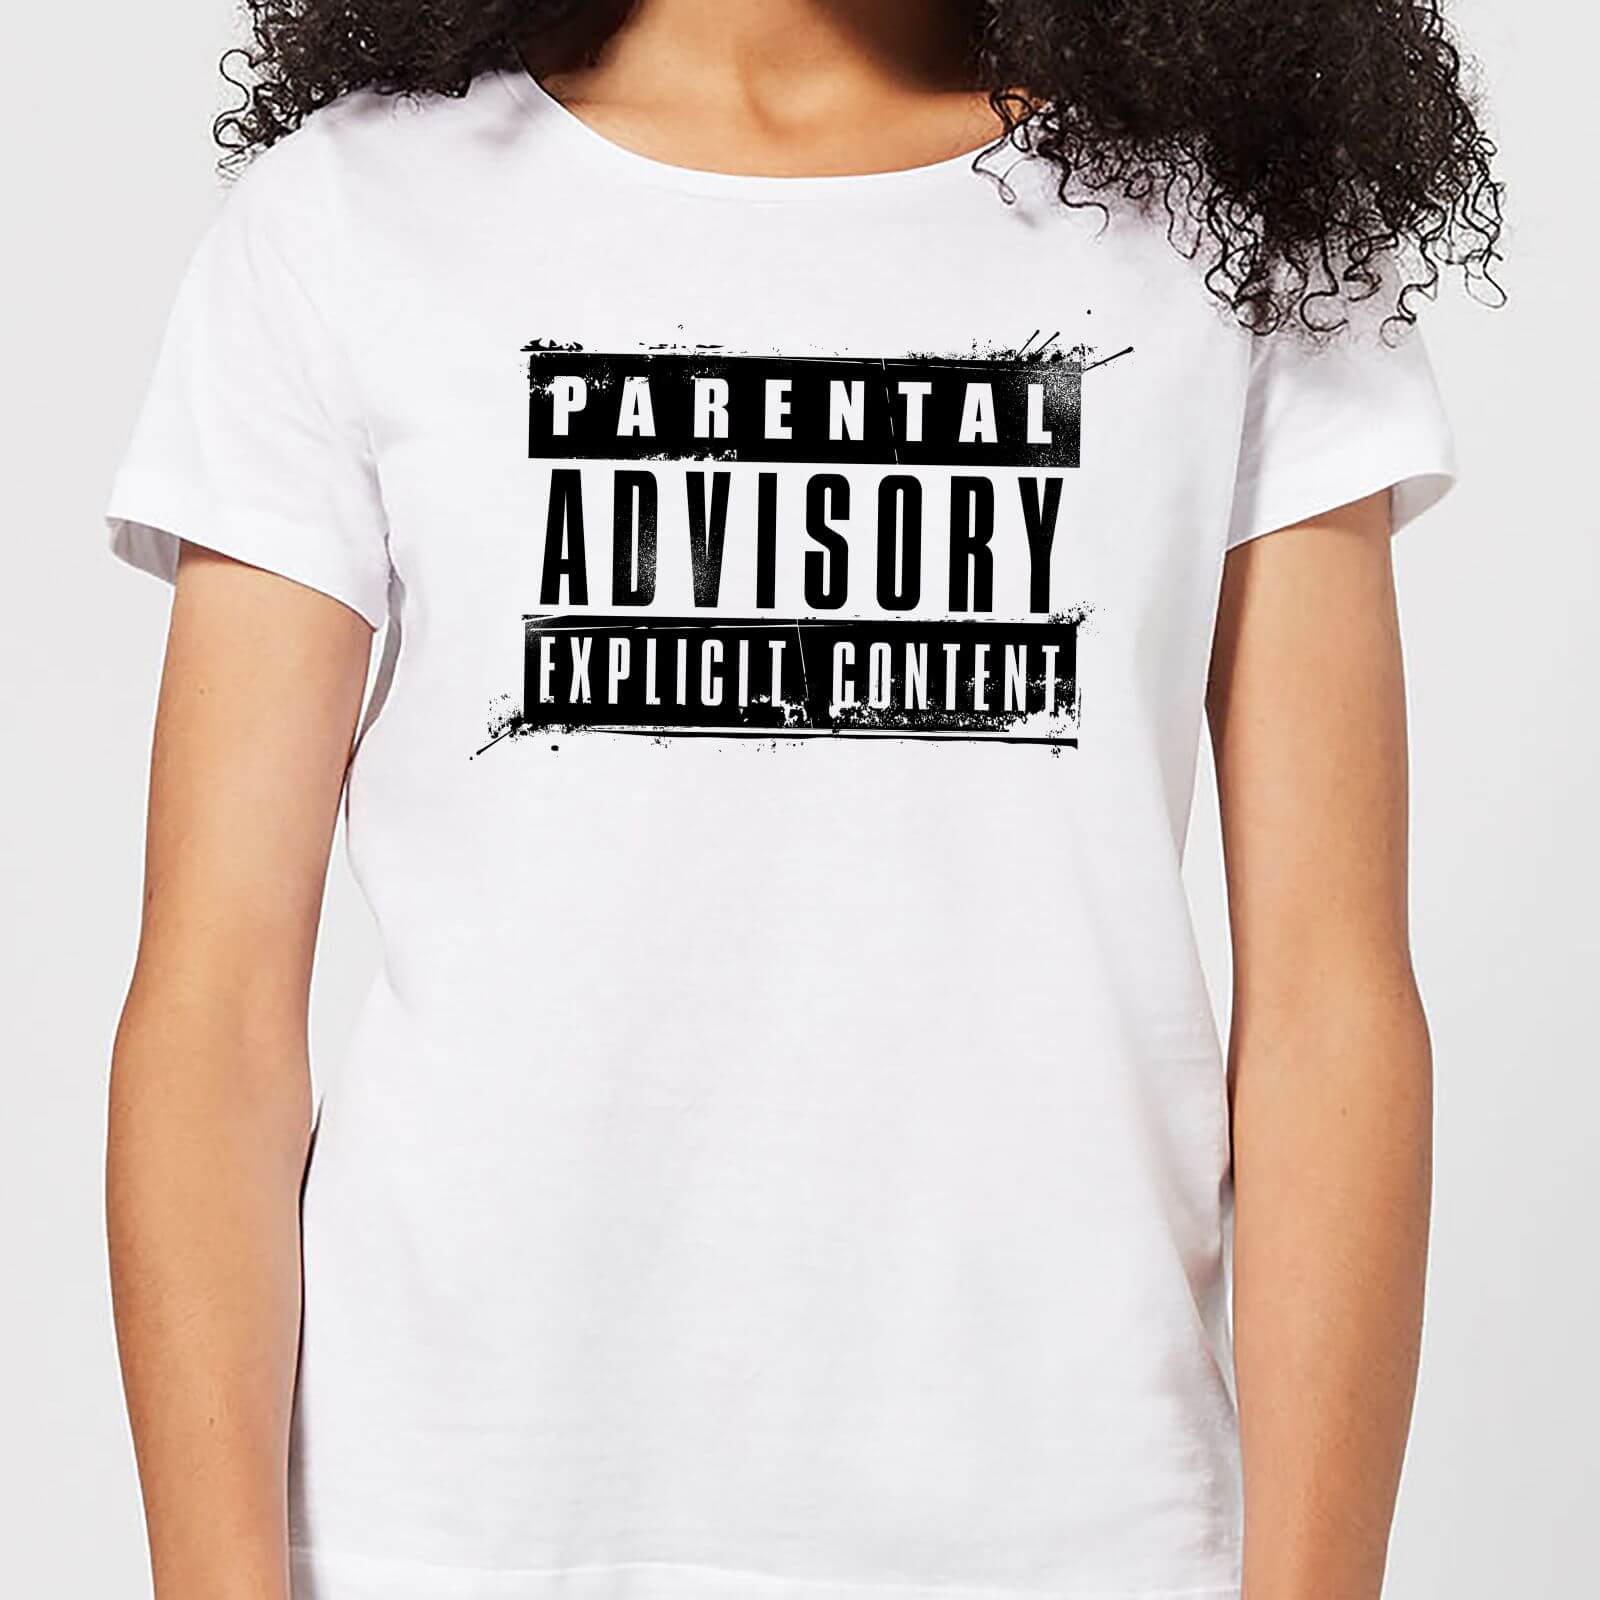 Parental Advisory Explicit Content Black Women's T-Shirt - White - XL - Blanco